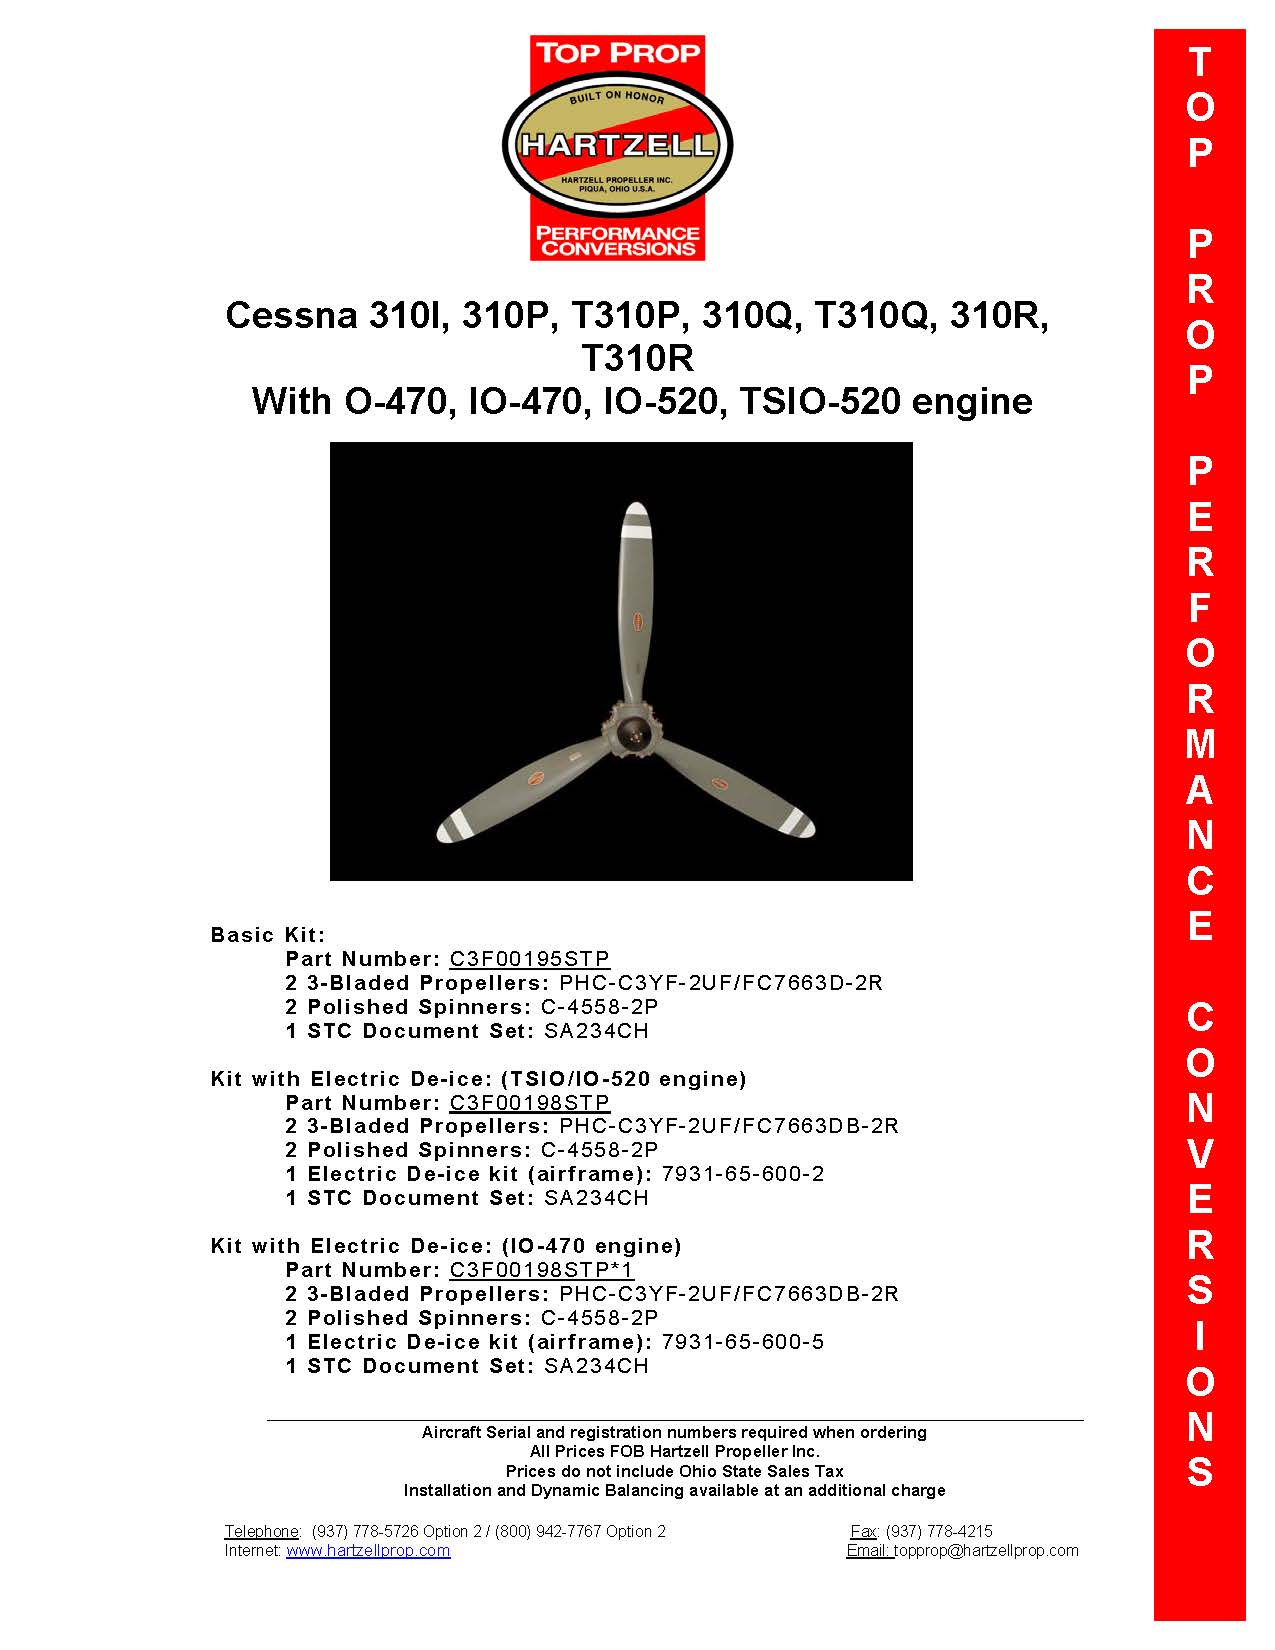 CESSNA-310-C3F00195STP-PAGE-1